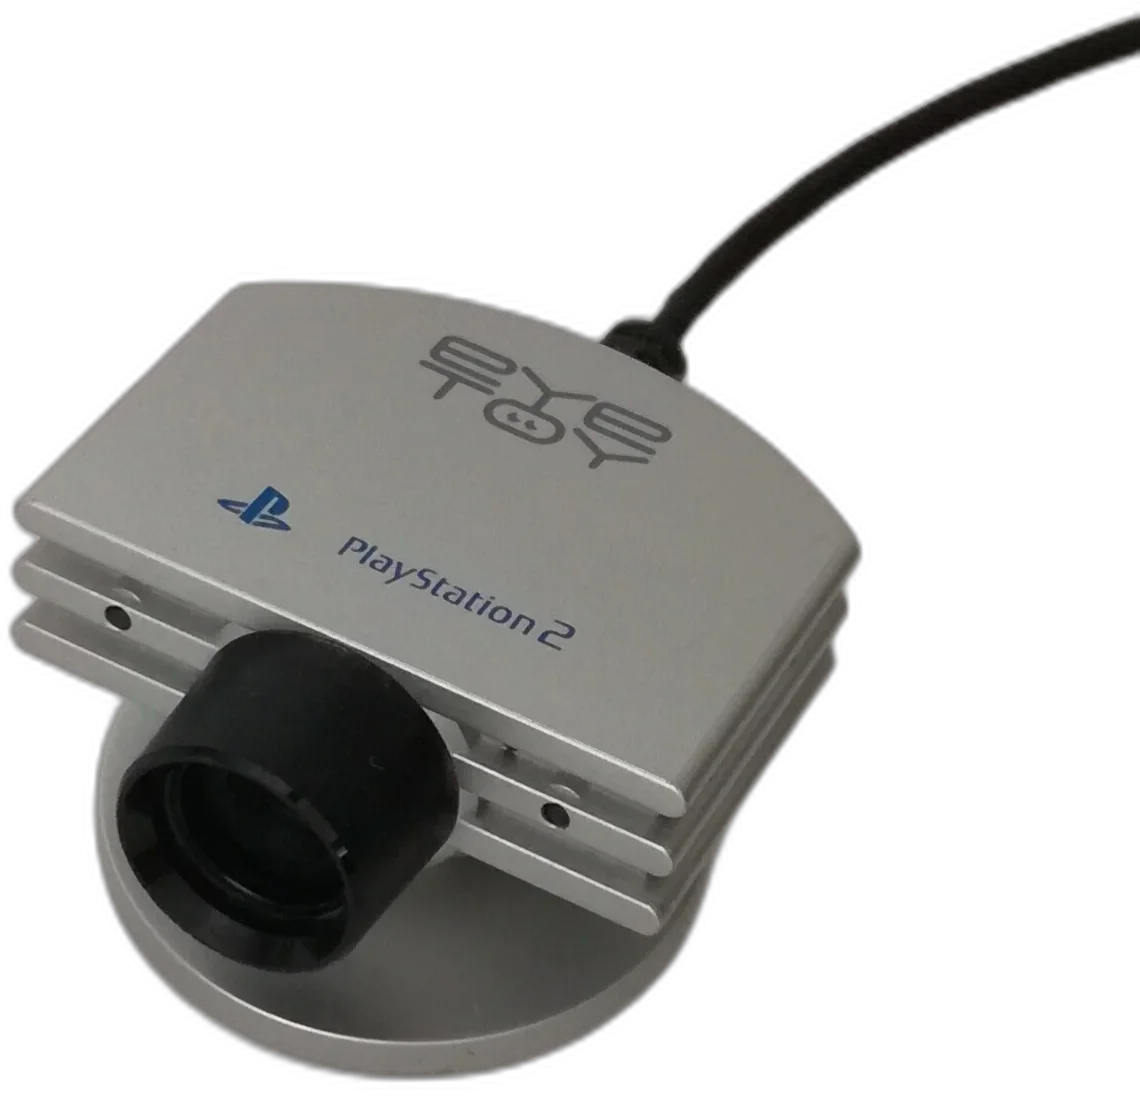  Sony PlayStation 2 Silver EyeToy Camera